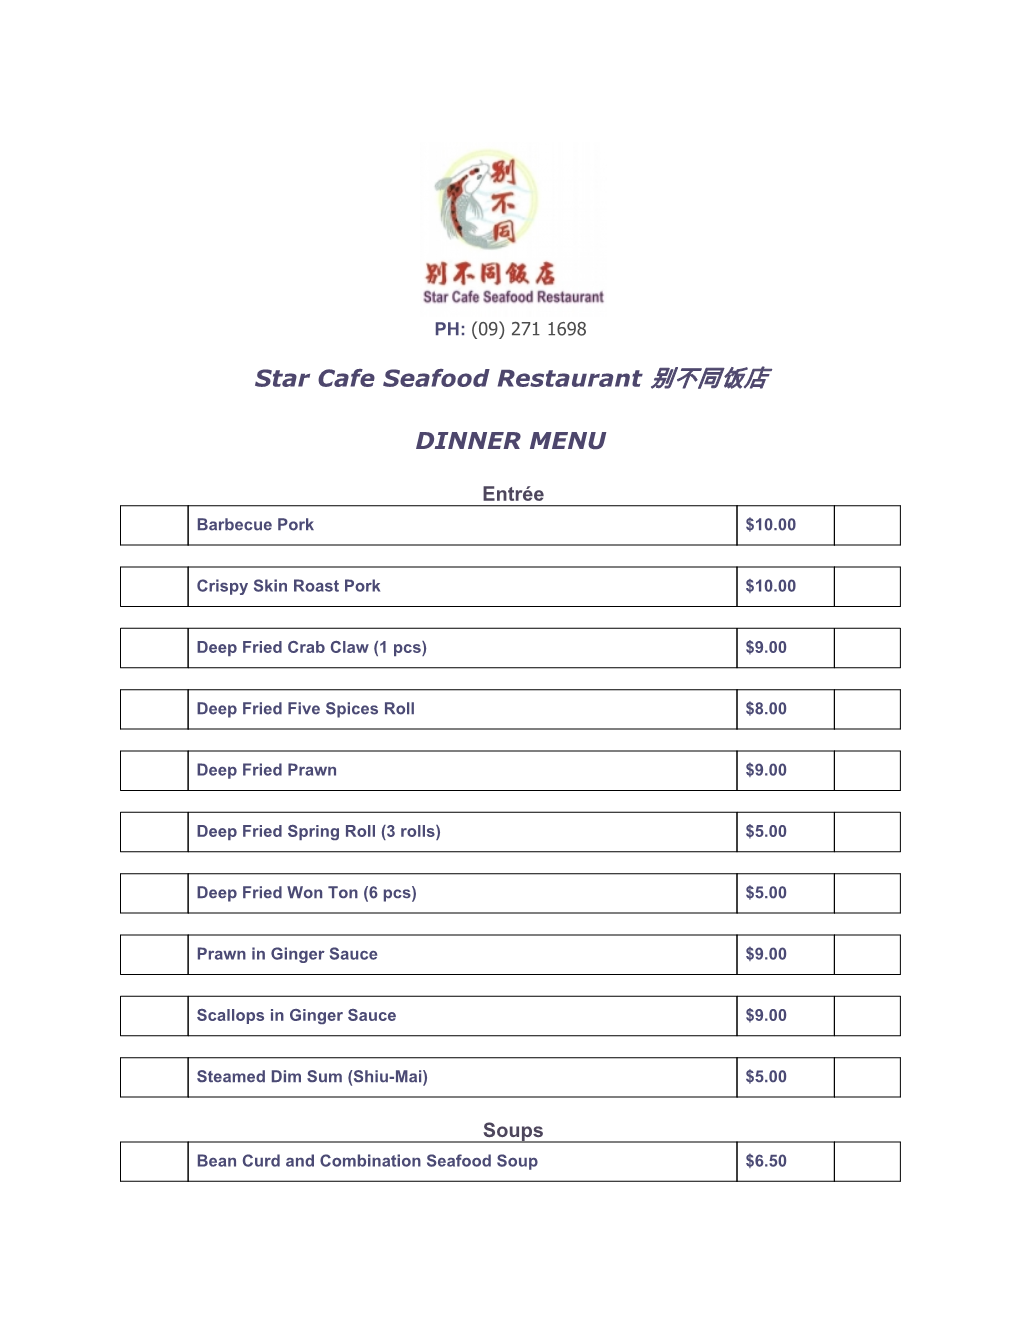 Star Cafe Seafood Restaurant 别不同饭店 DINNER MENU